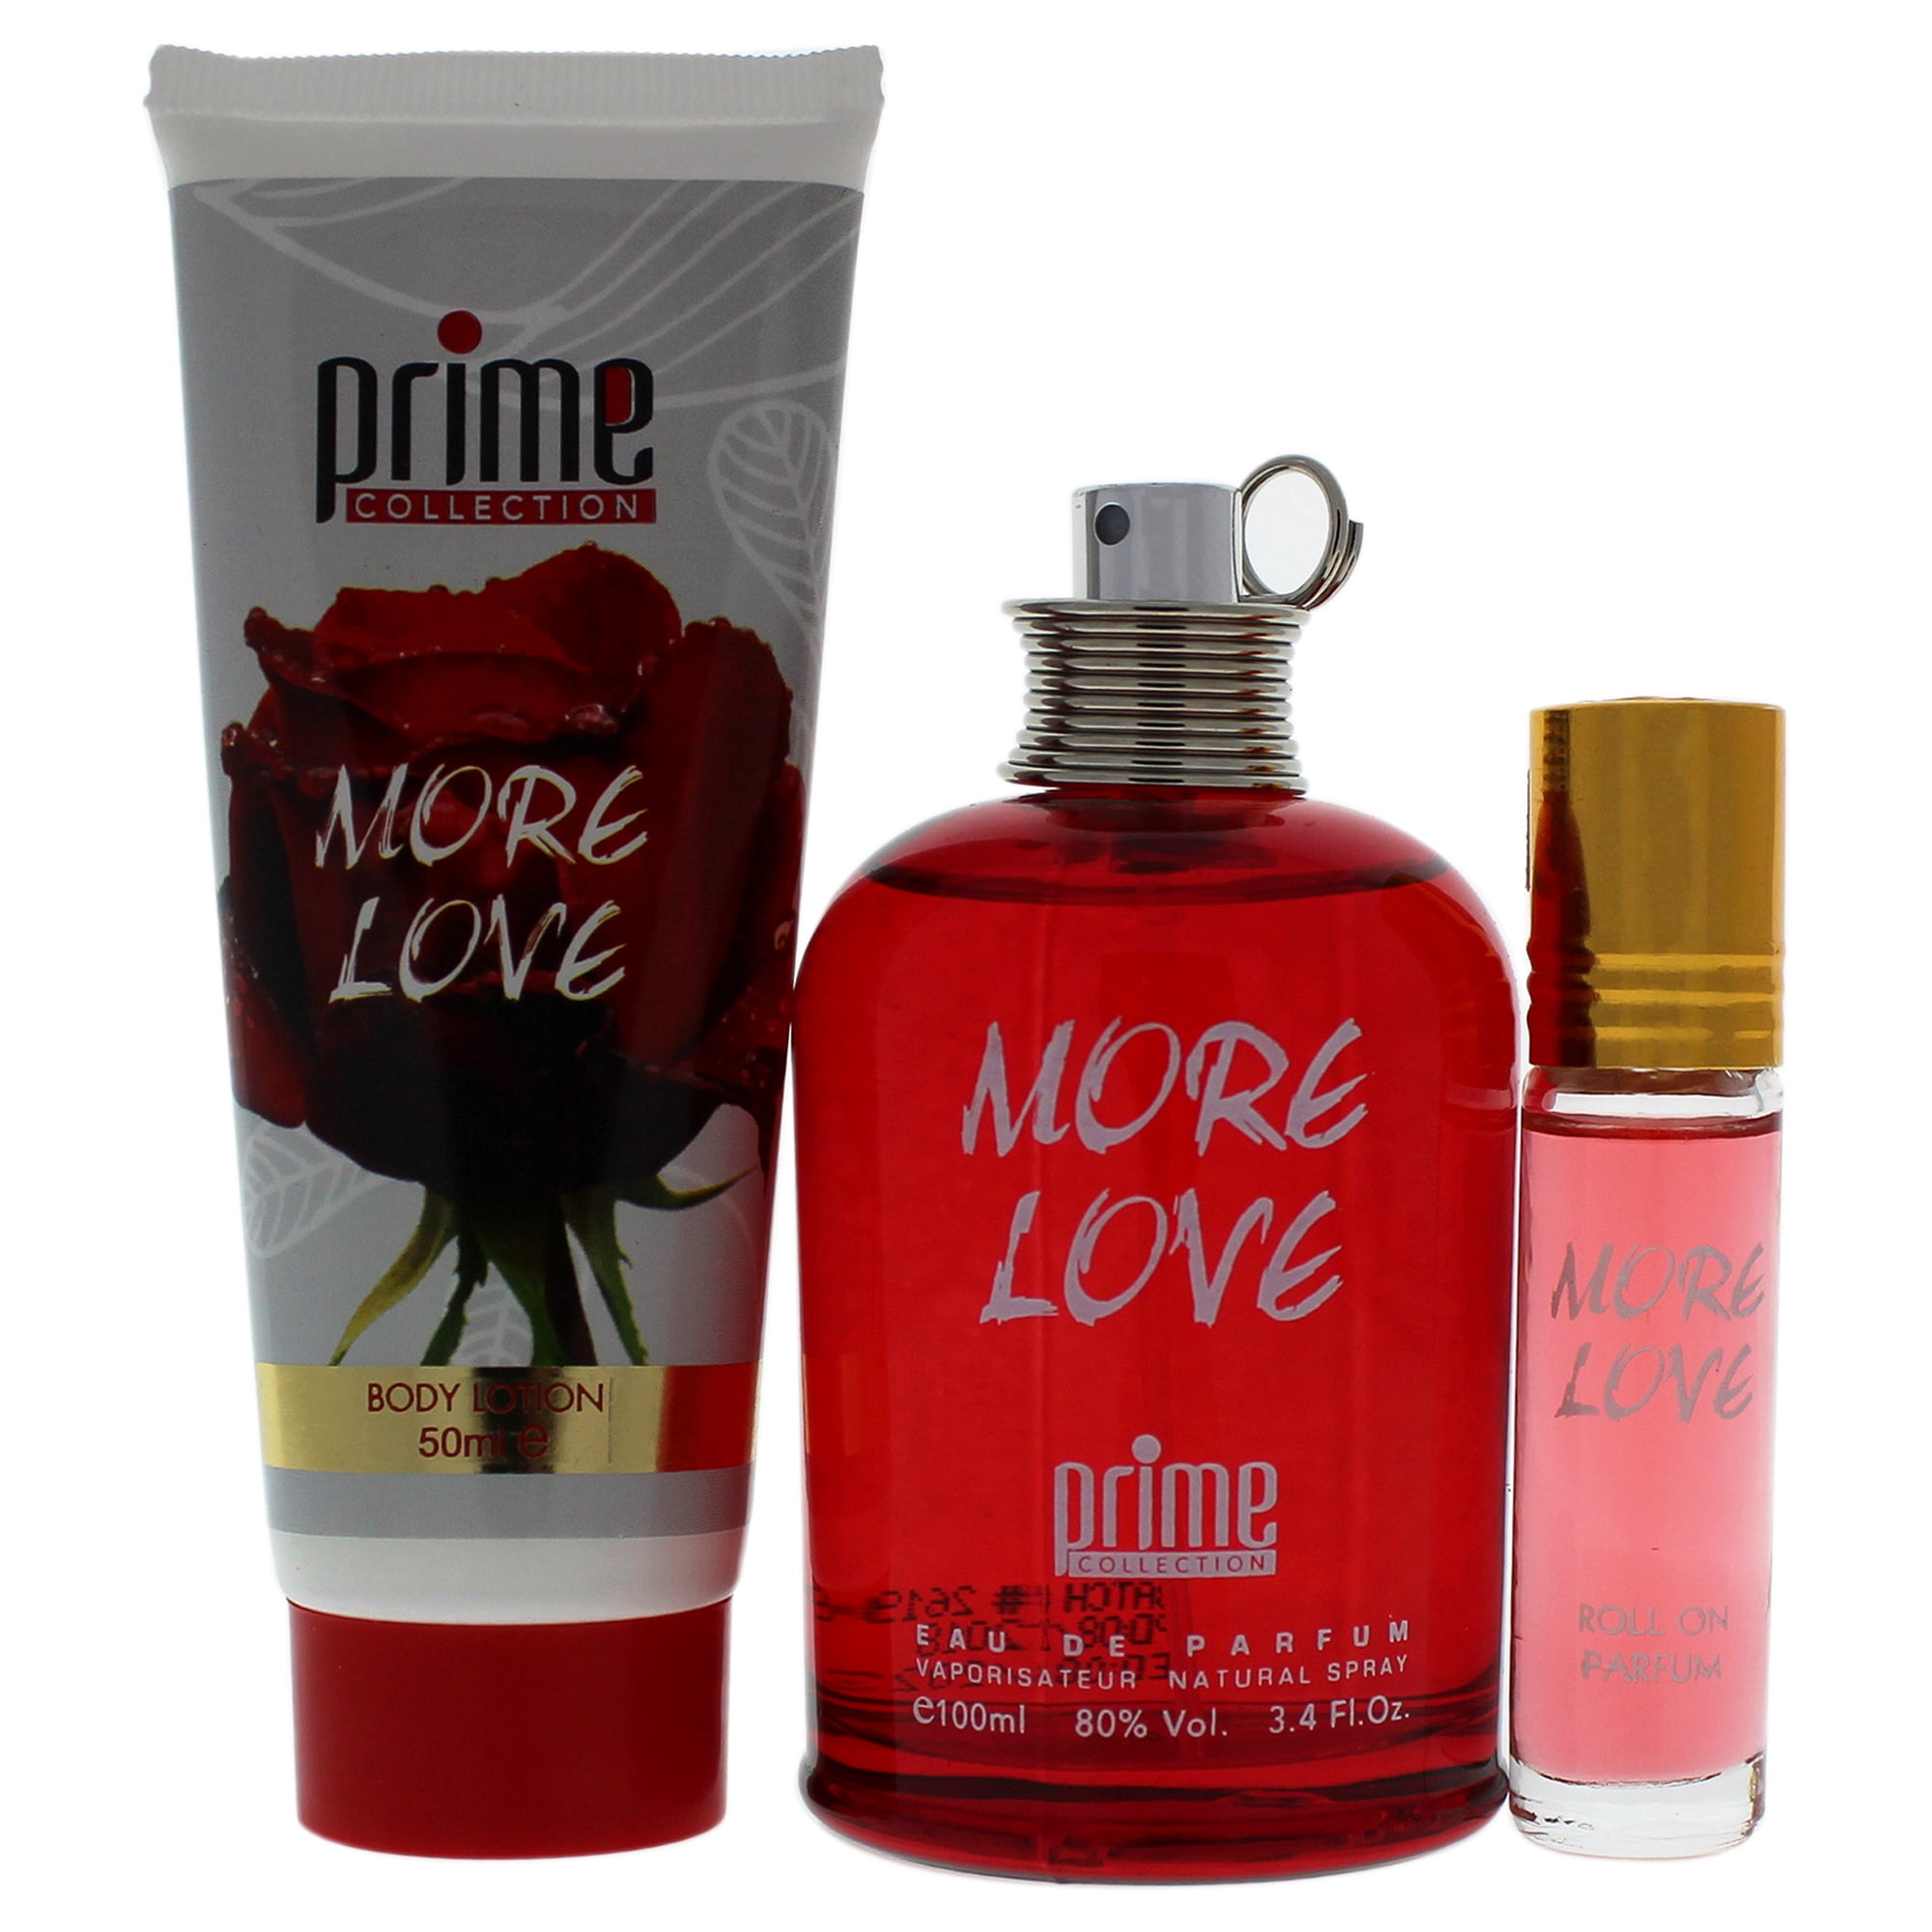 Духи Flame Orchid. Lovesmore духи. Deep sense women Prime collection Parfums. Морэ лов духи красные. Prime collection